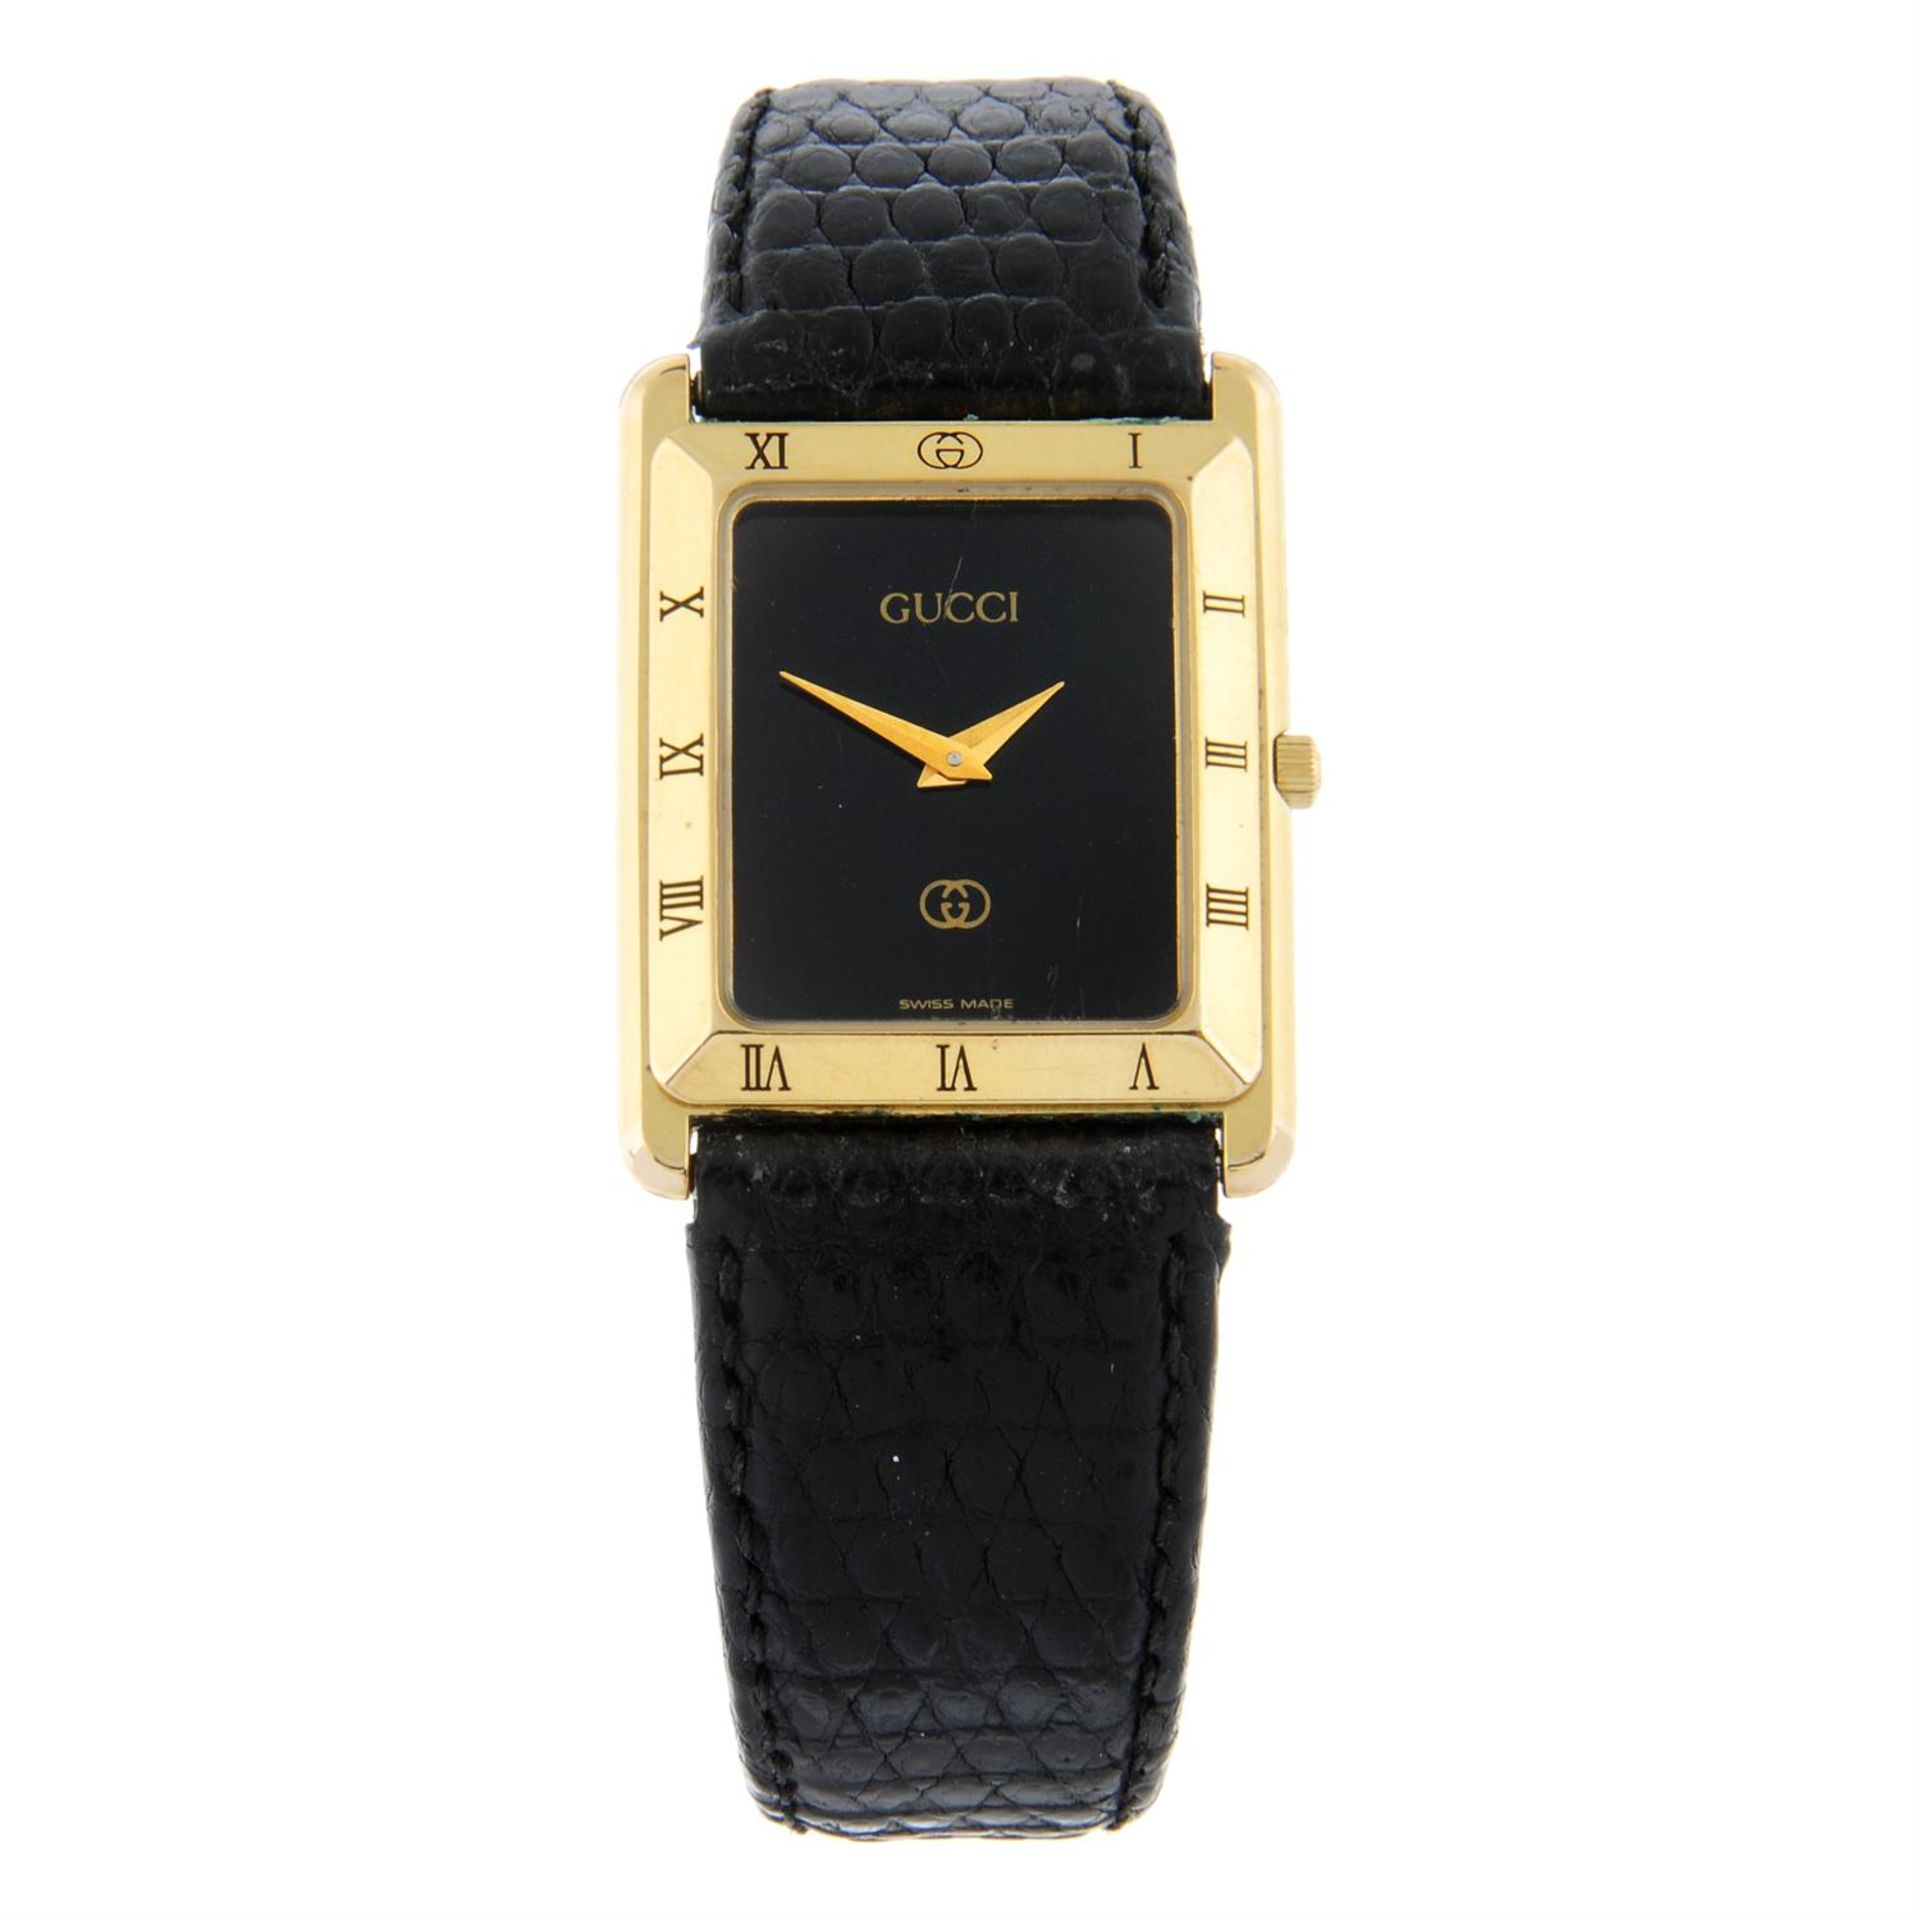 GUCCI - a gold plated 4200FM wrist watch, 24x26mm.